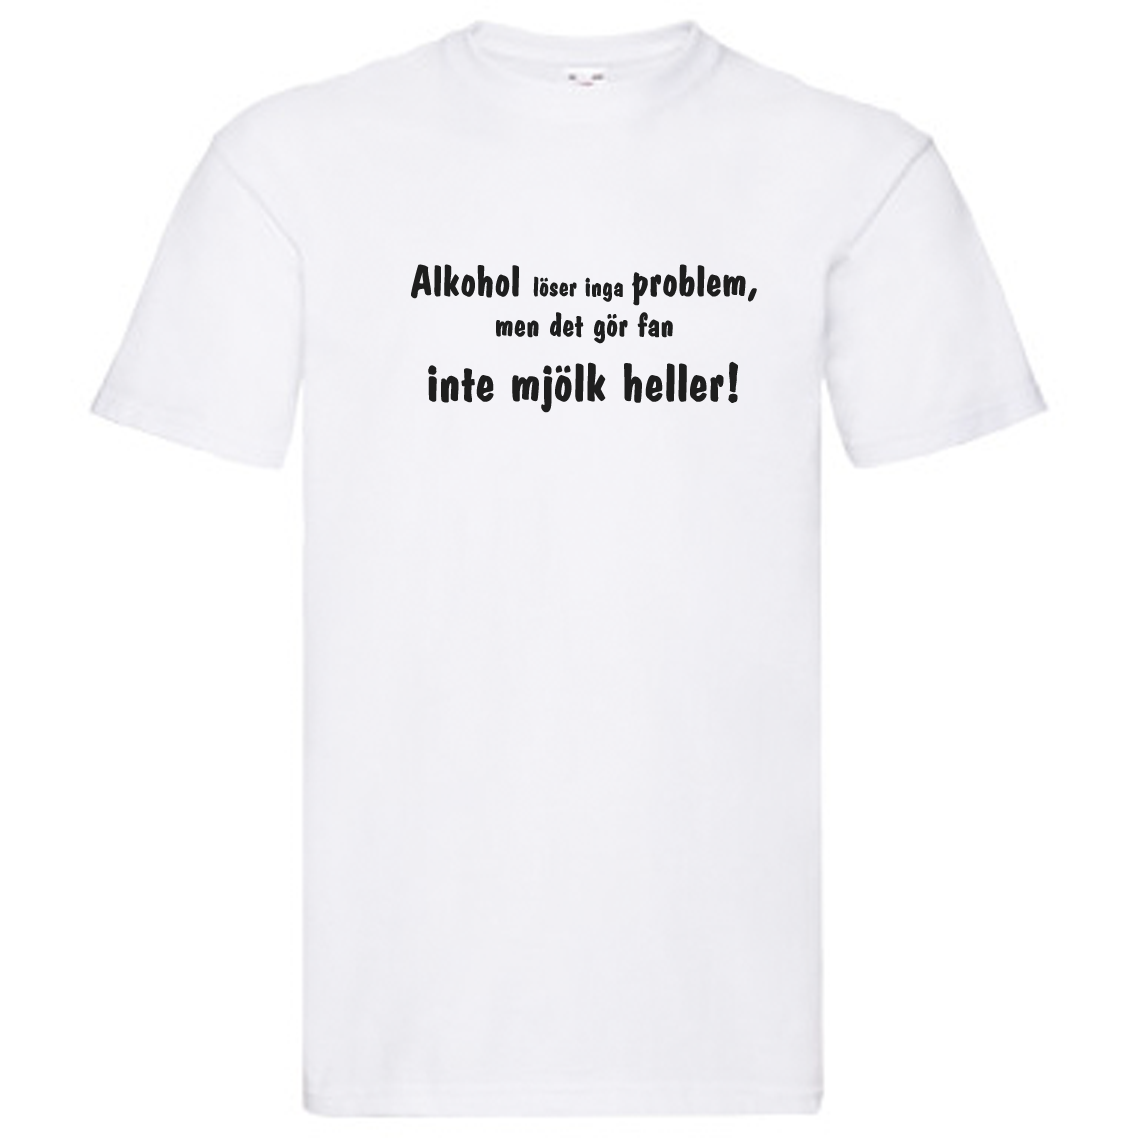 T-Shirt - Alkohol löser inga problem, inte mjölk heller